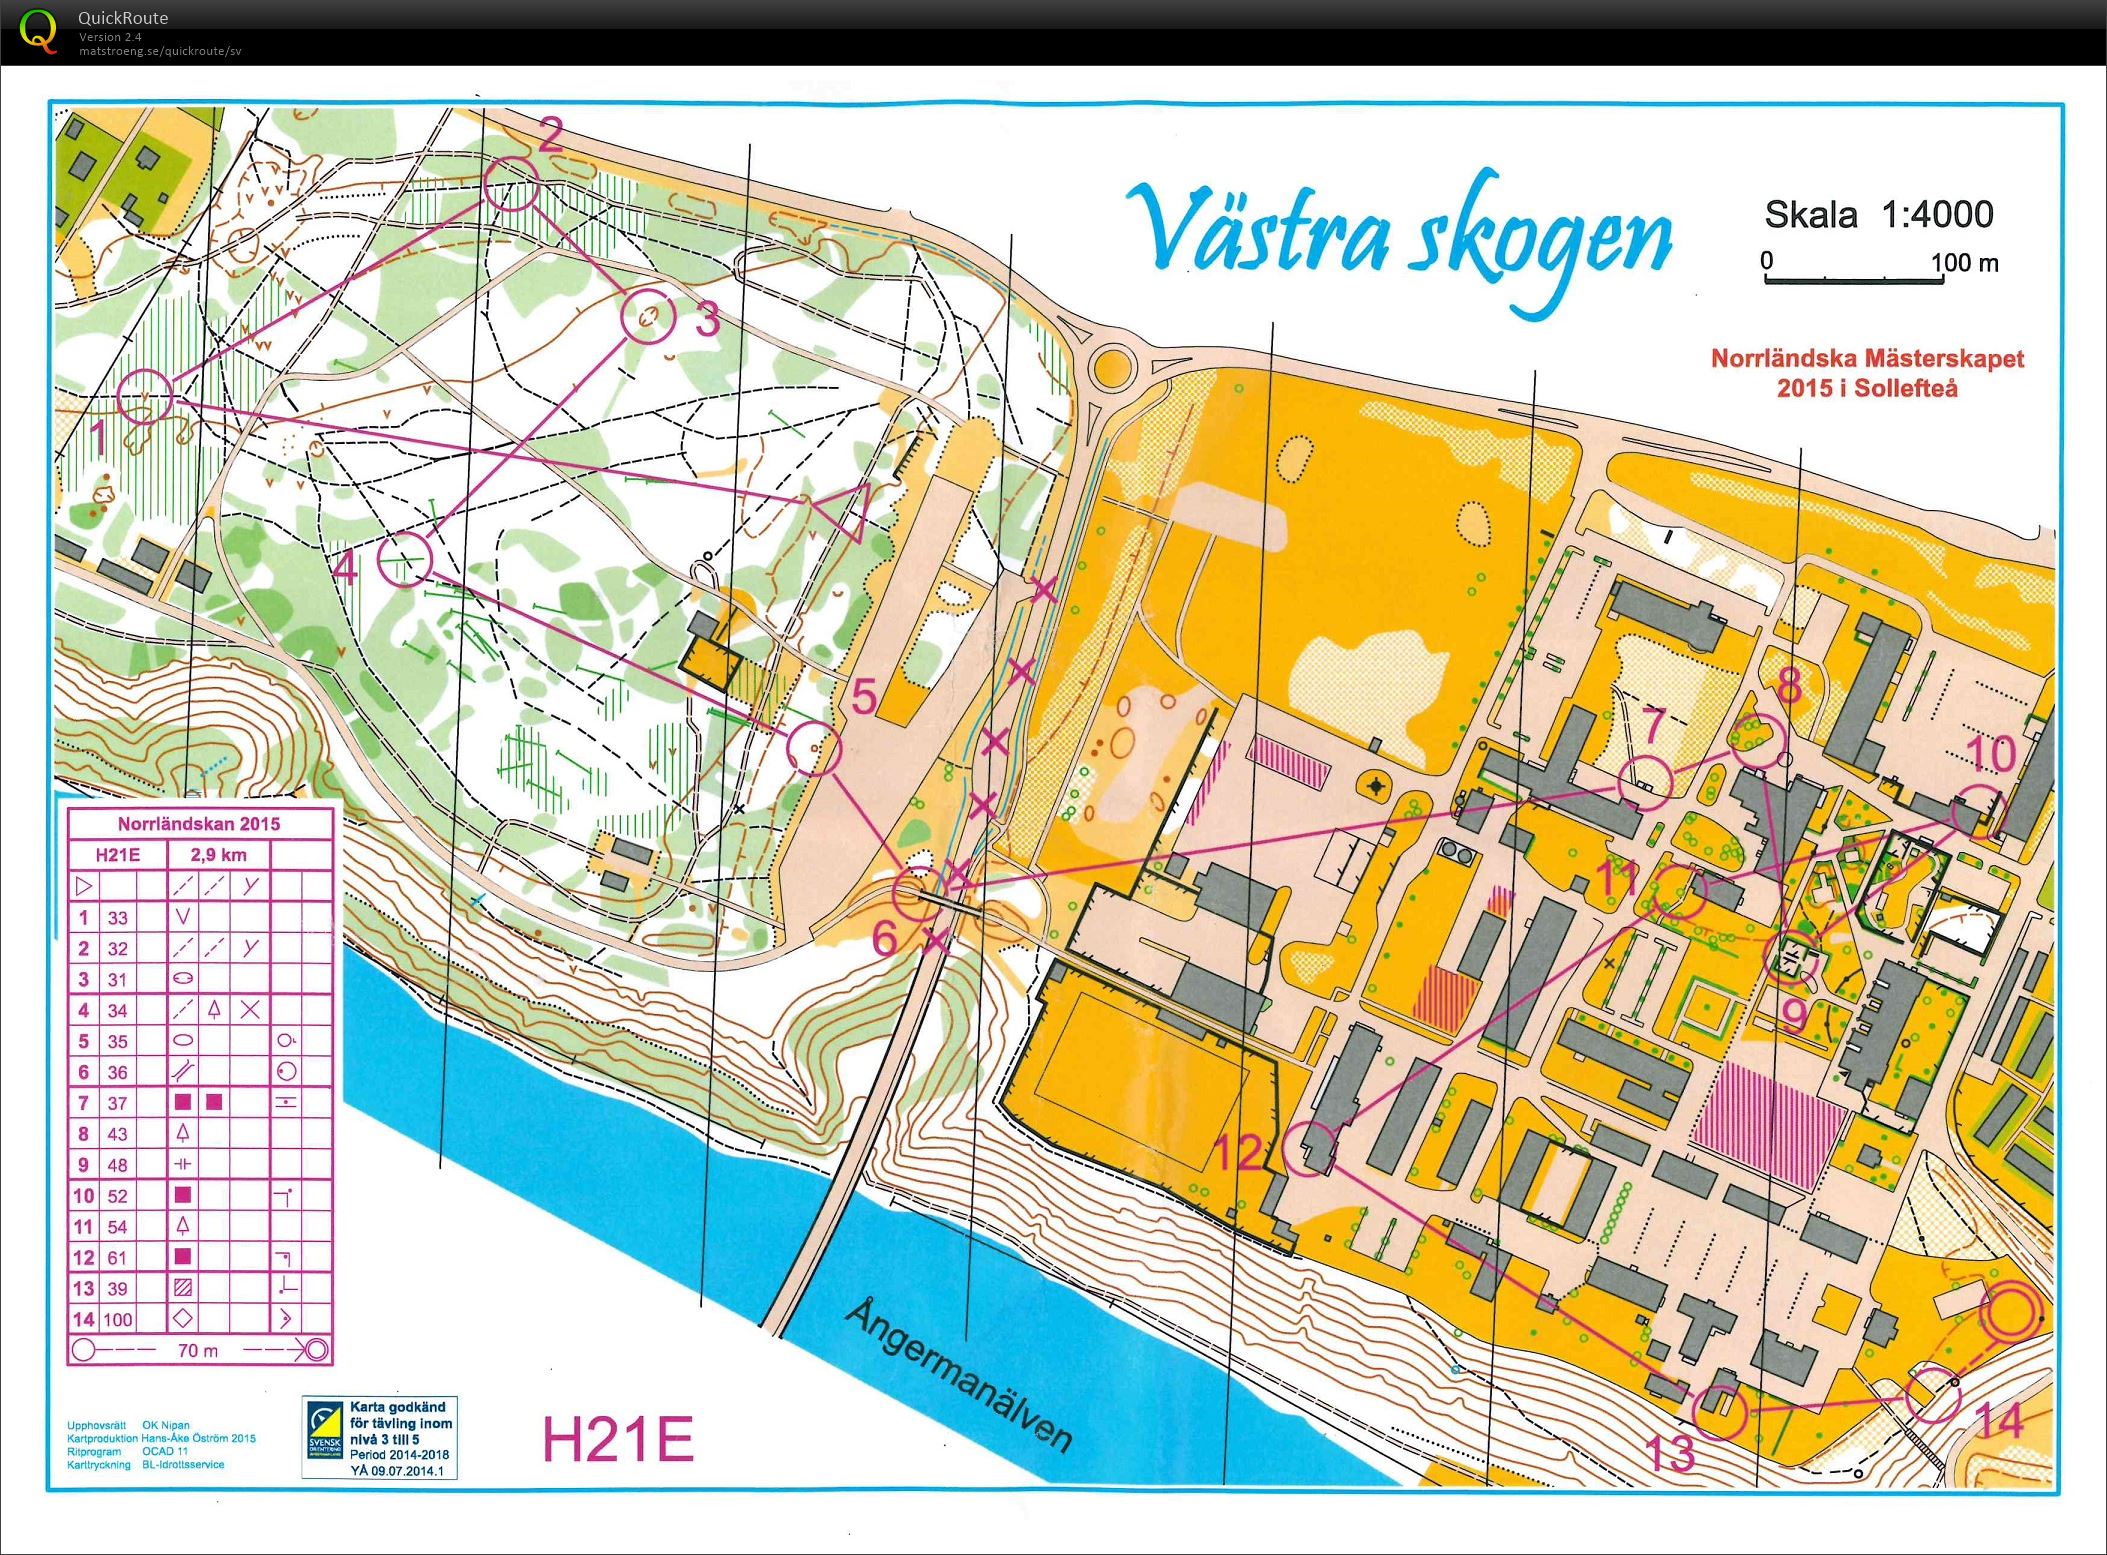 NM, Sollefteå, sprint (07-08-2015)